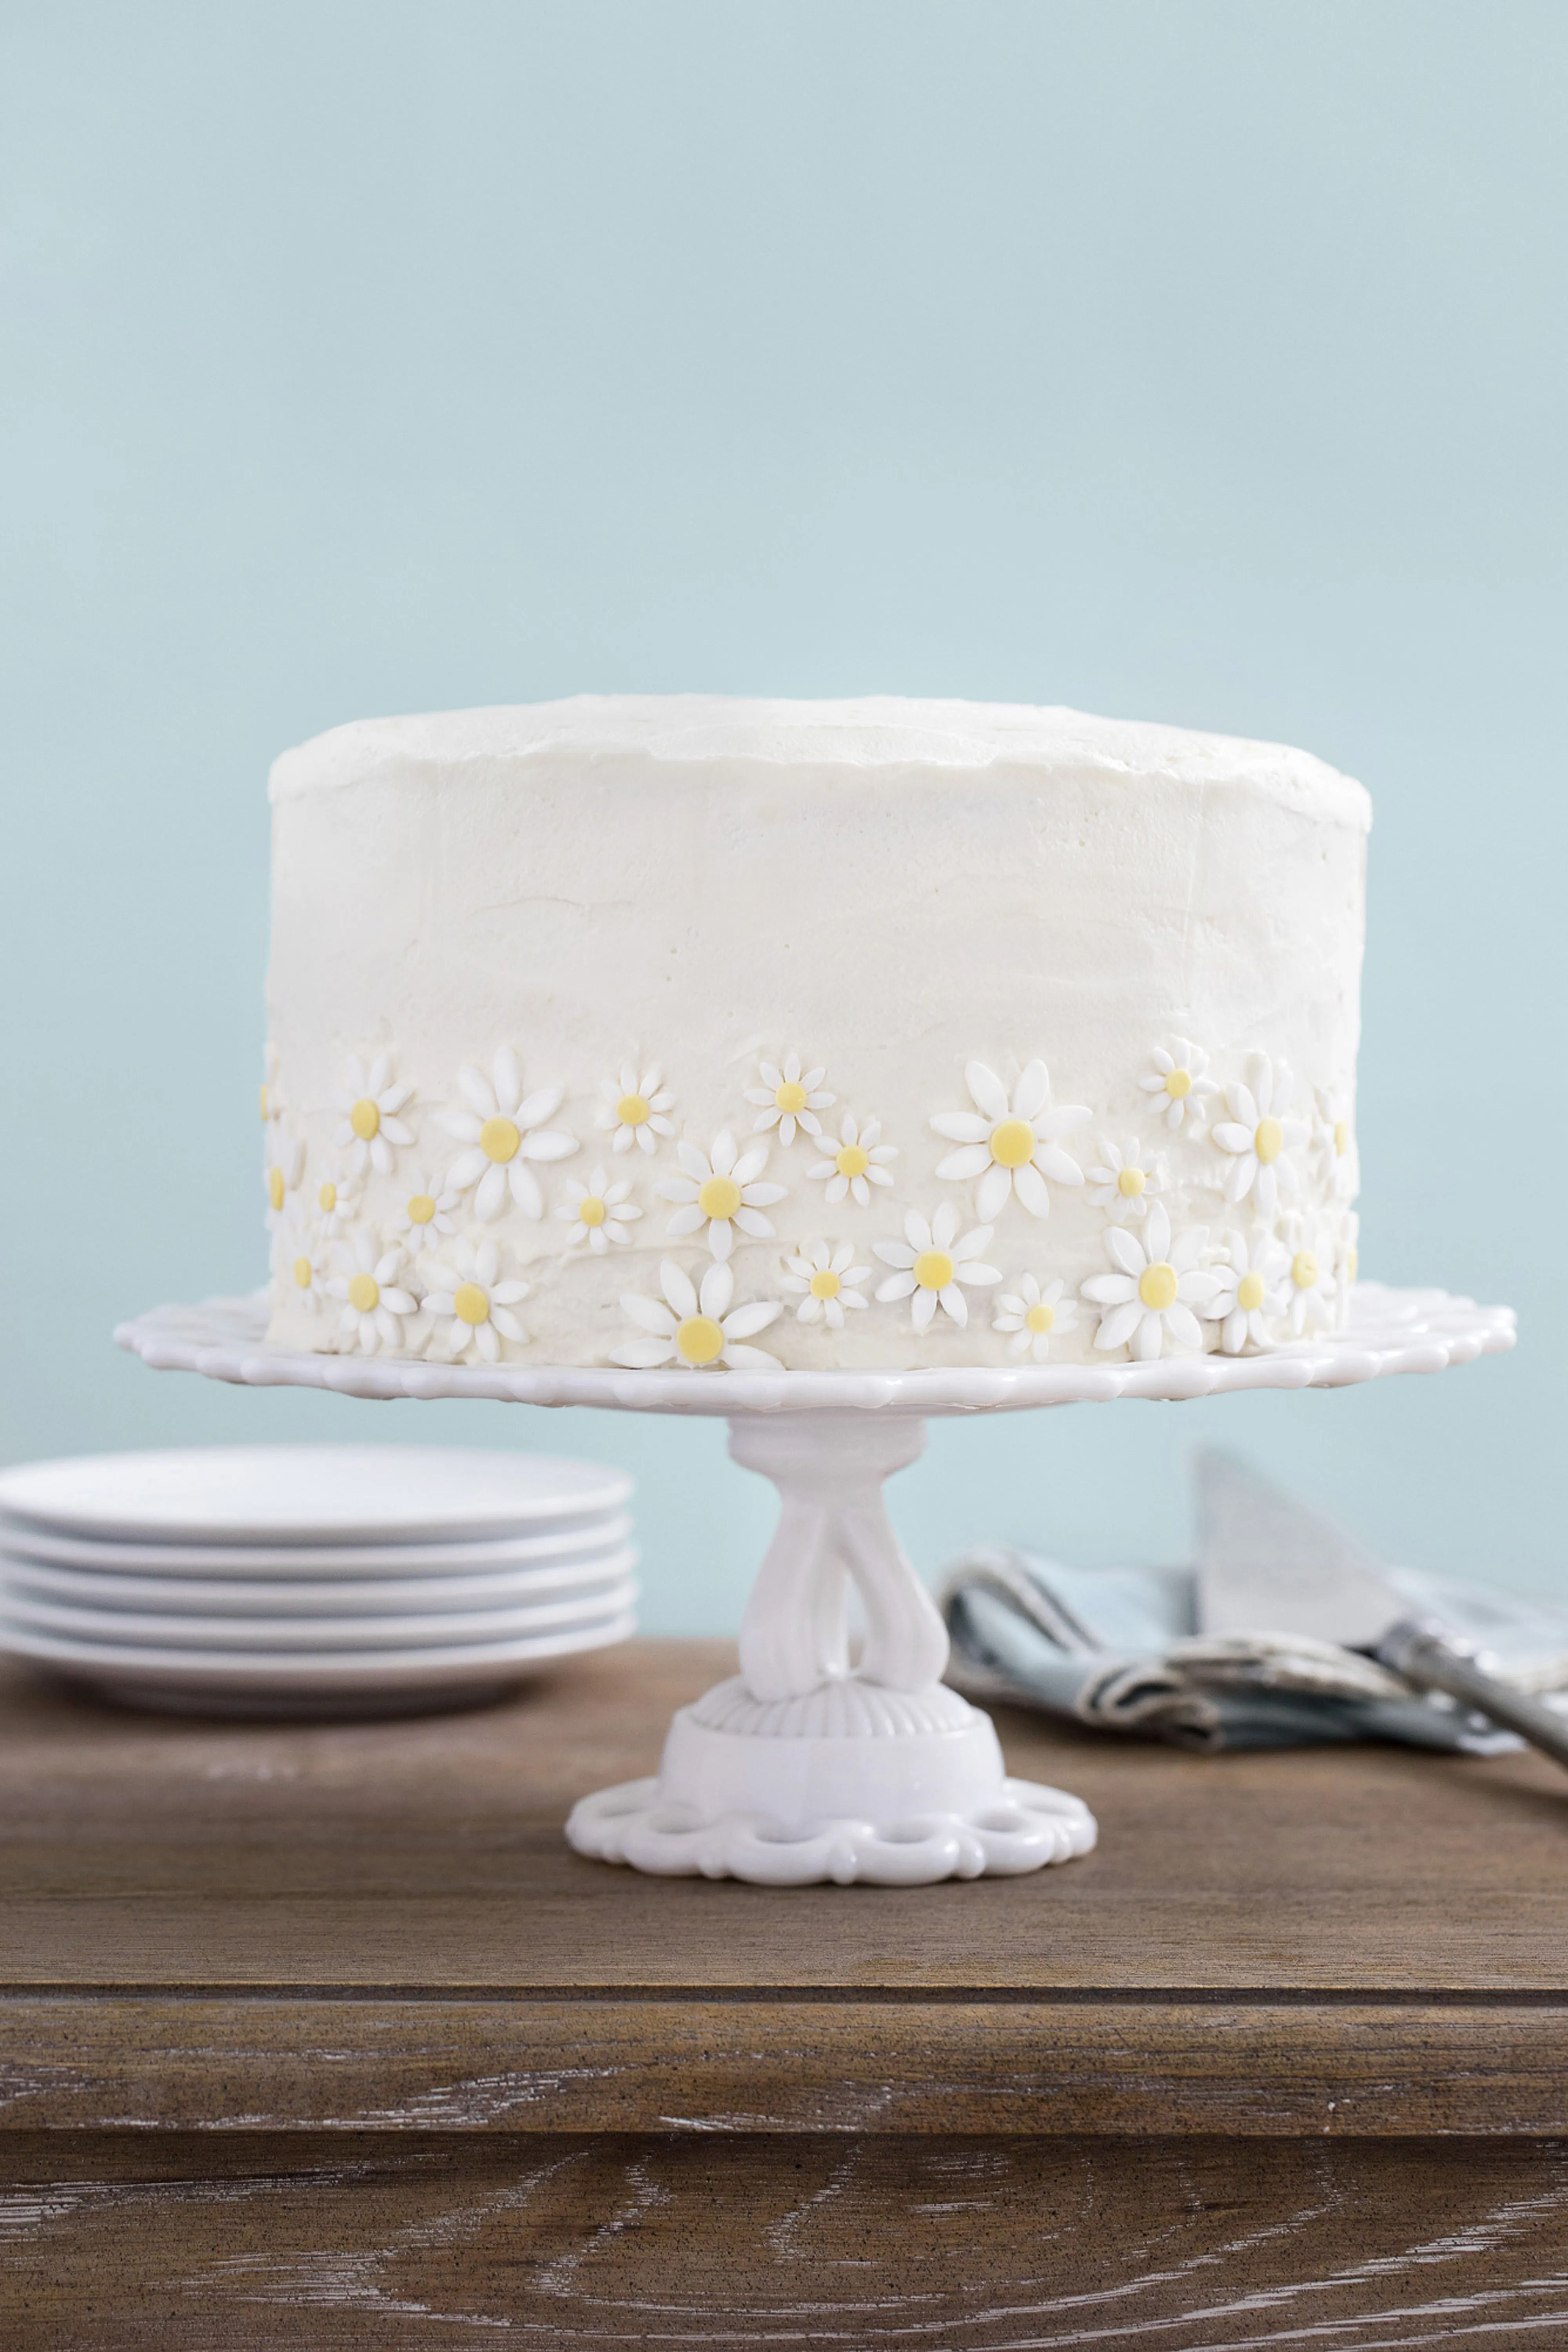 Delicious White Cake Recipe with Ermine Frosting - Veena Azmanov